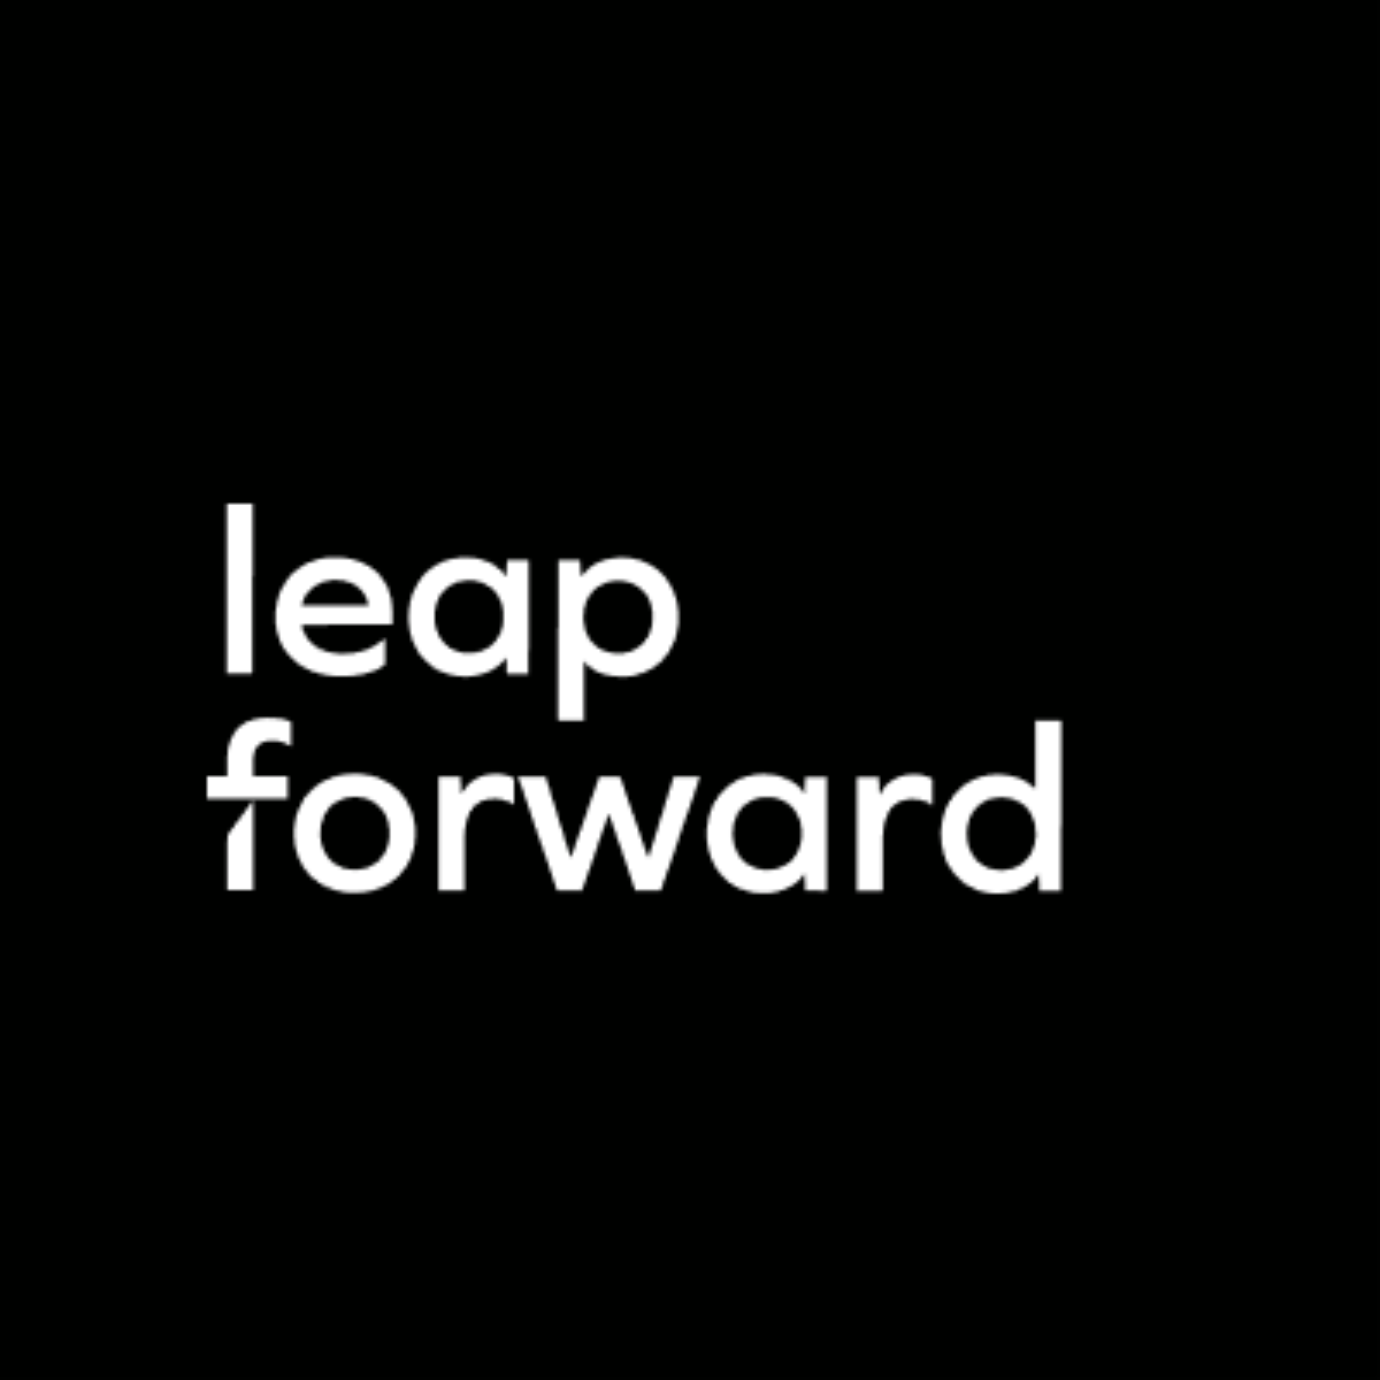 Leap forward